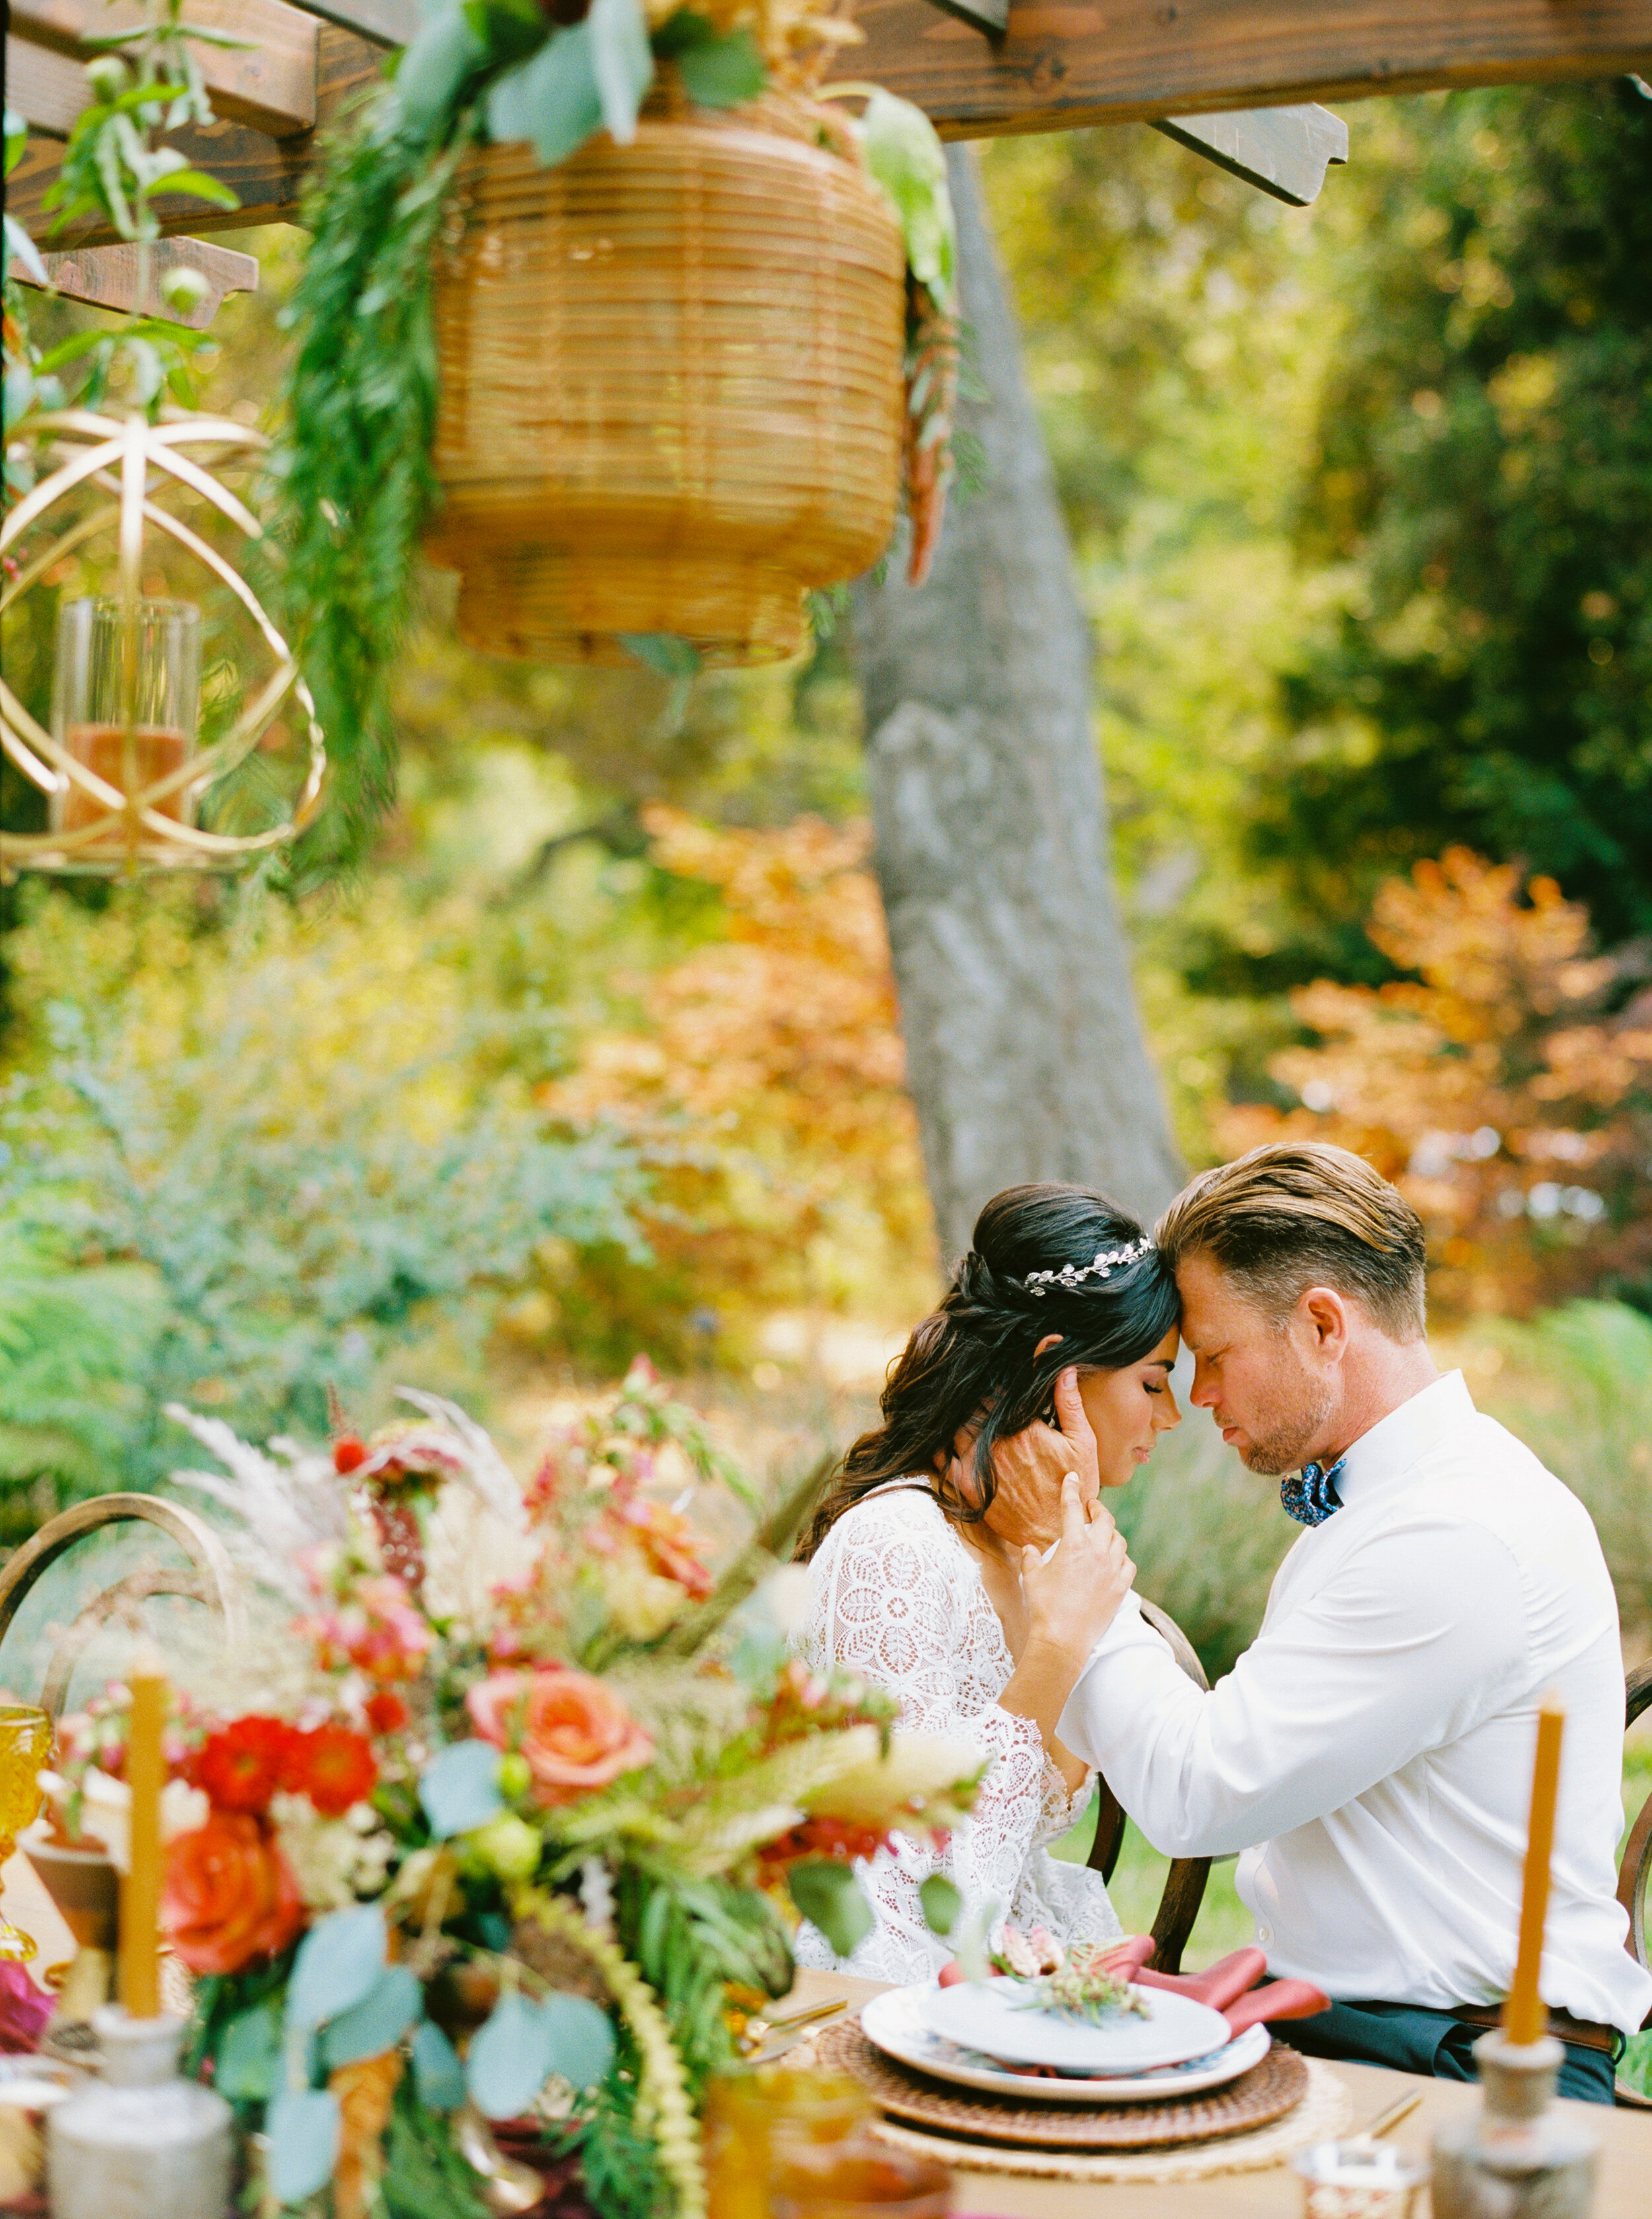 Sarahi Hadden - An Earthy Summer Boho Inspired Wedding with Sunset Hues at Gardener Ranch-8.jpg